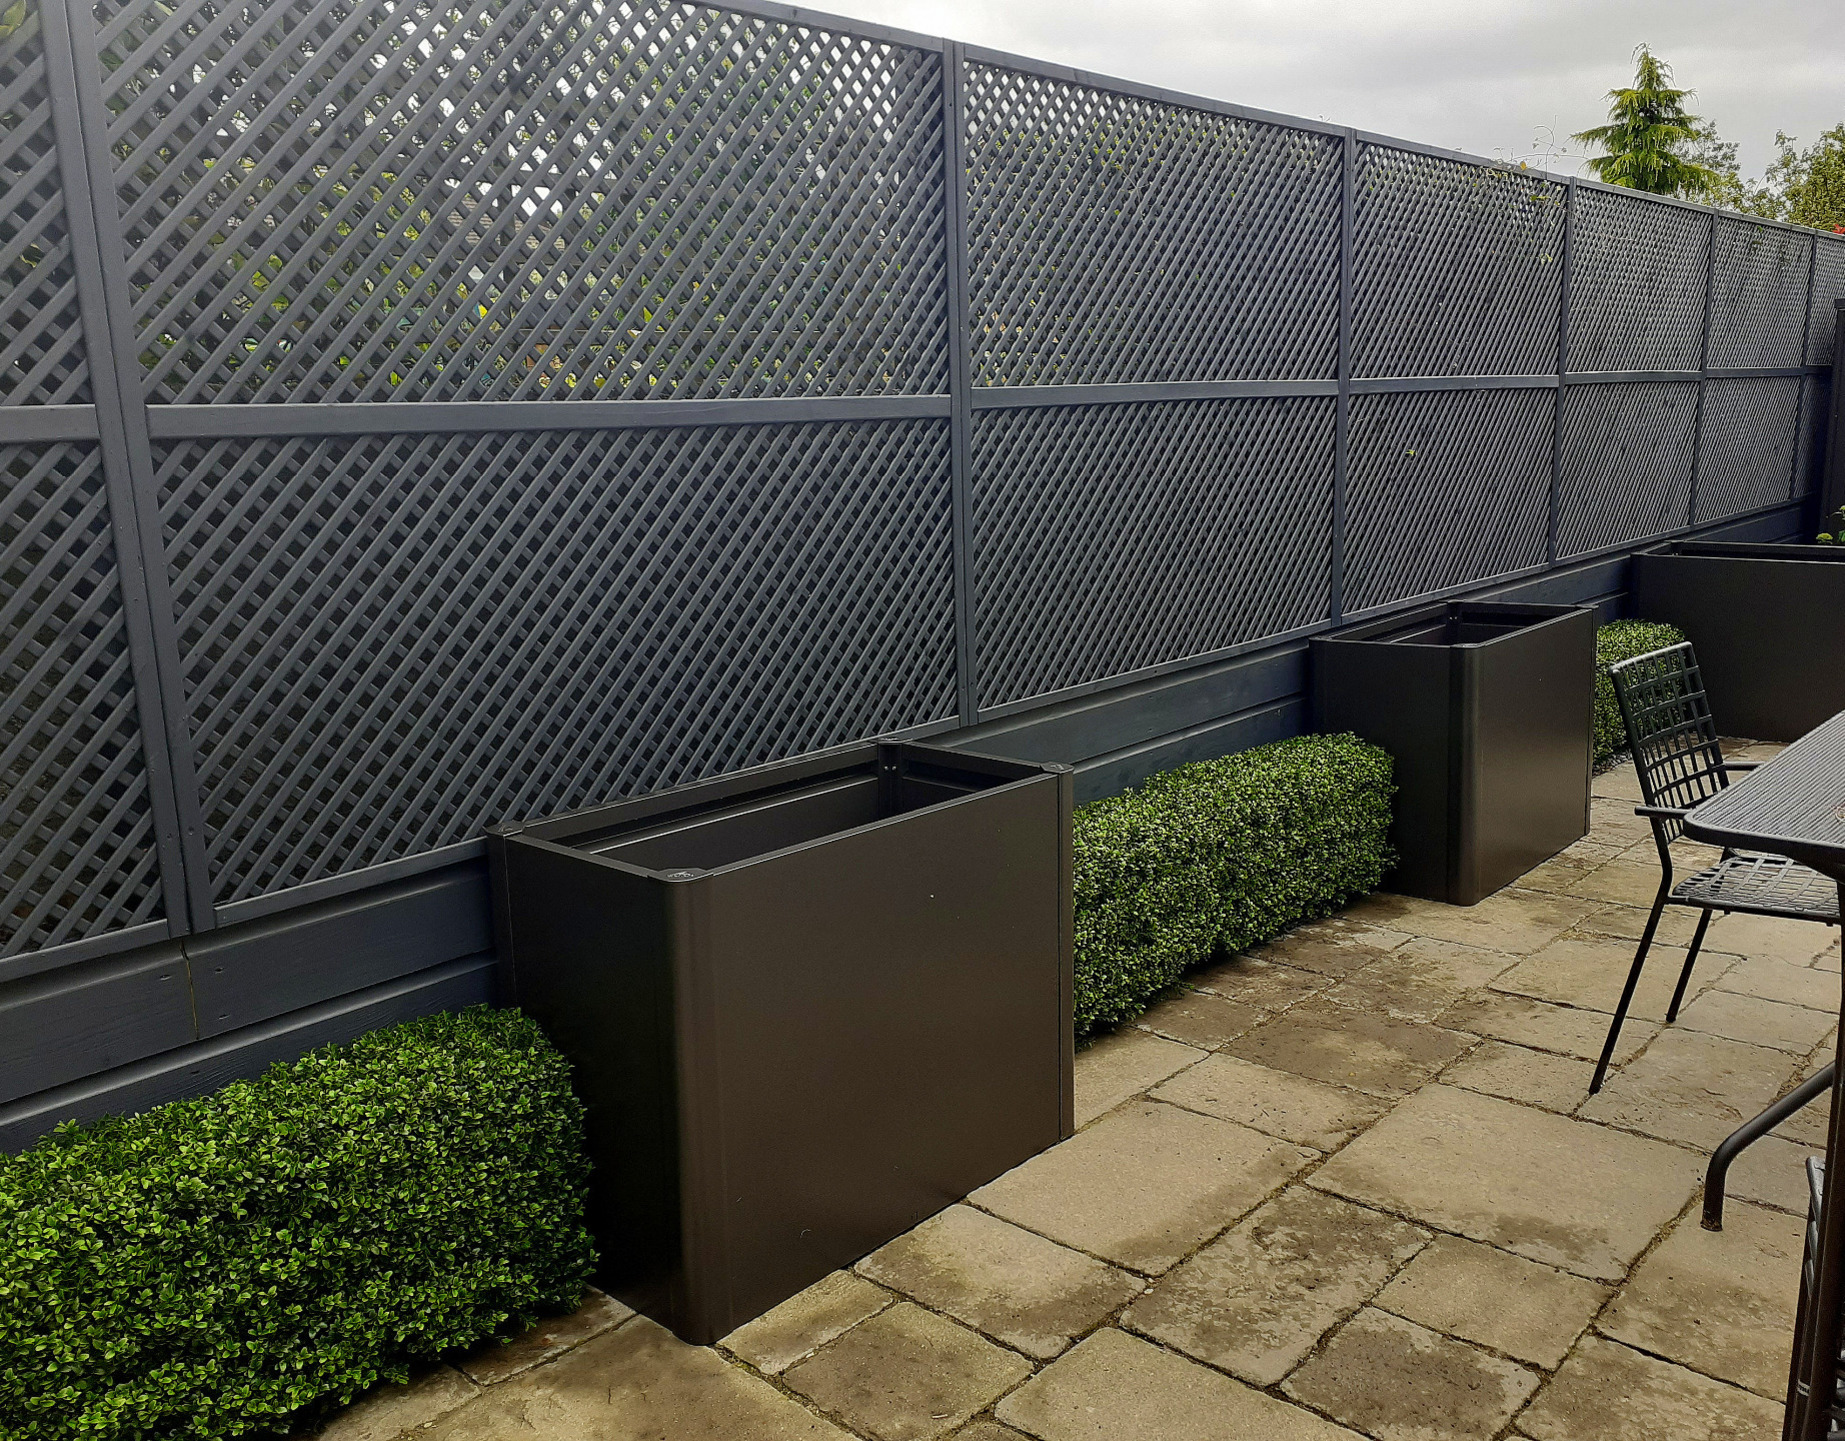 A stunning, durable & innovative steel Planter |Biohort Planting Bed Belvedere Size M in metallic dark grey | Supplied + Fitted in Terenure, Dublin 6W | Owen Chubb